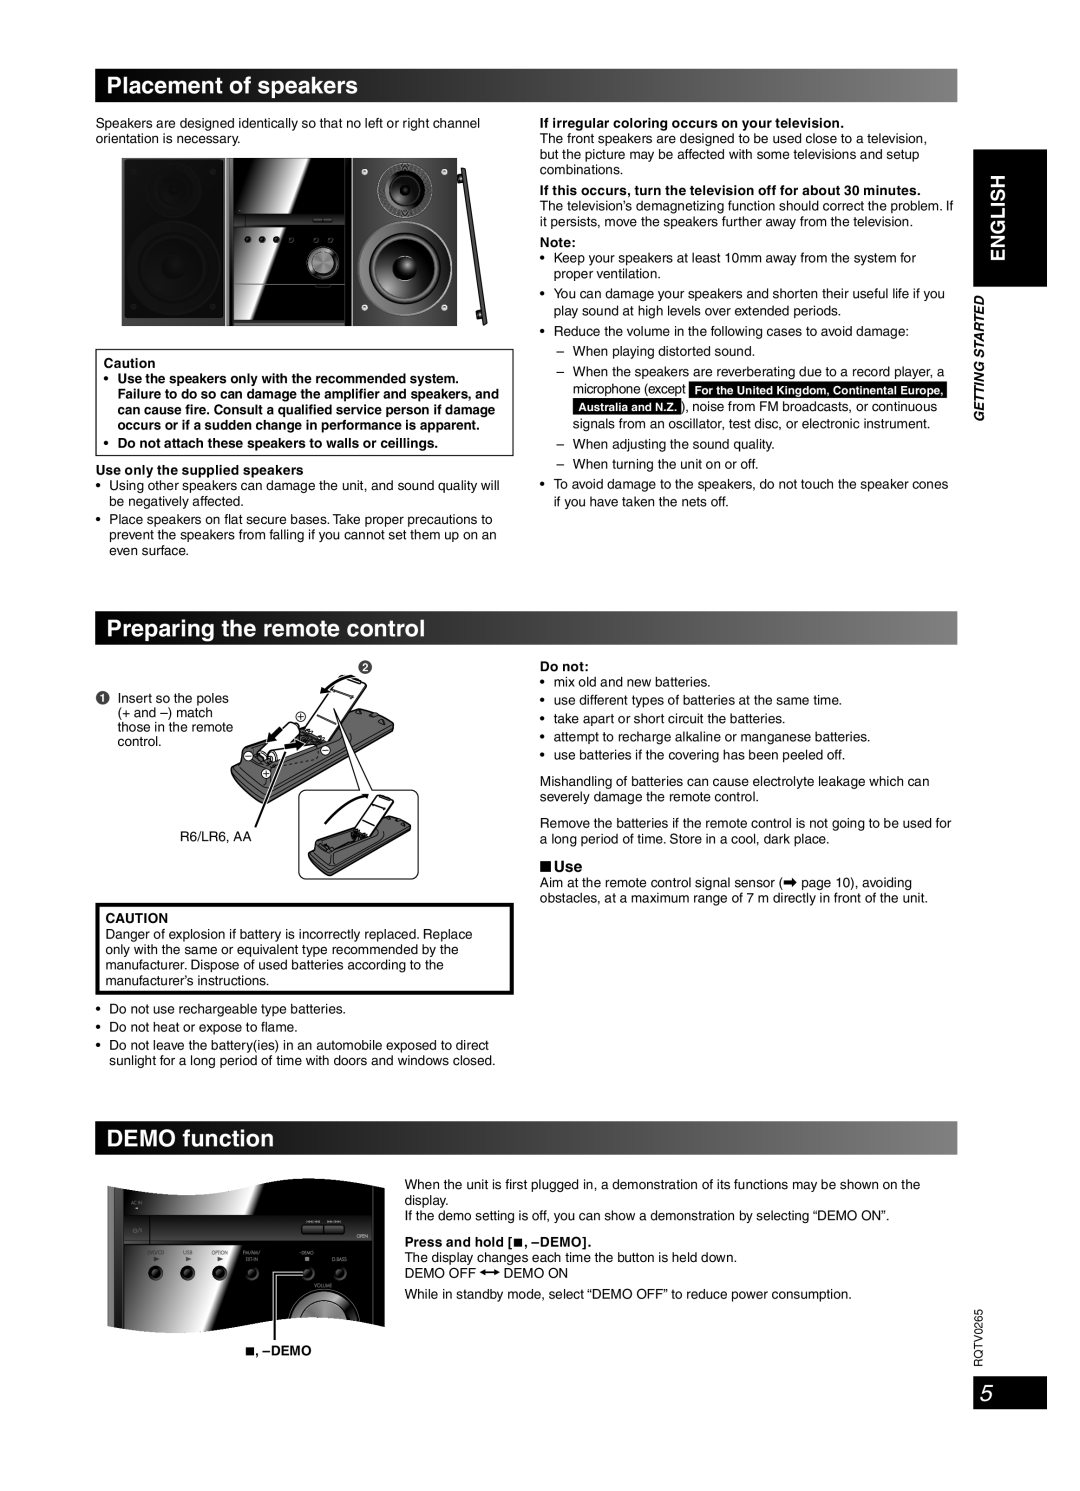 Panasonic SC-PM86D Placement of speakers, Preparing the remote control, DEMO function, English, Dansk, Français Lang 